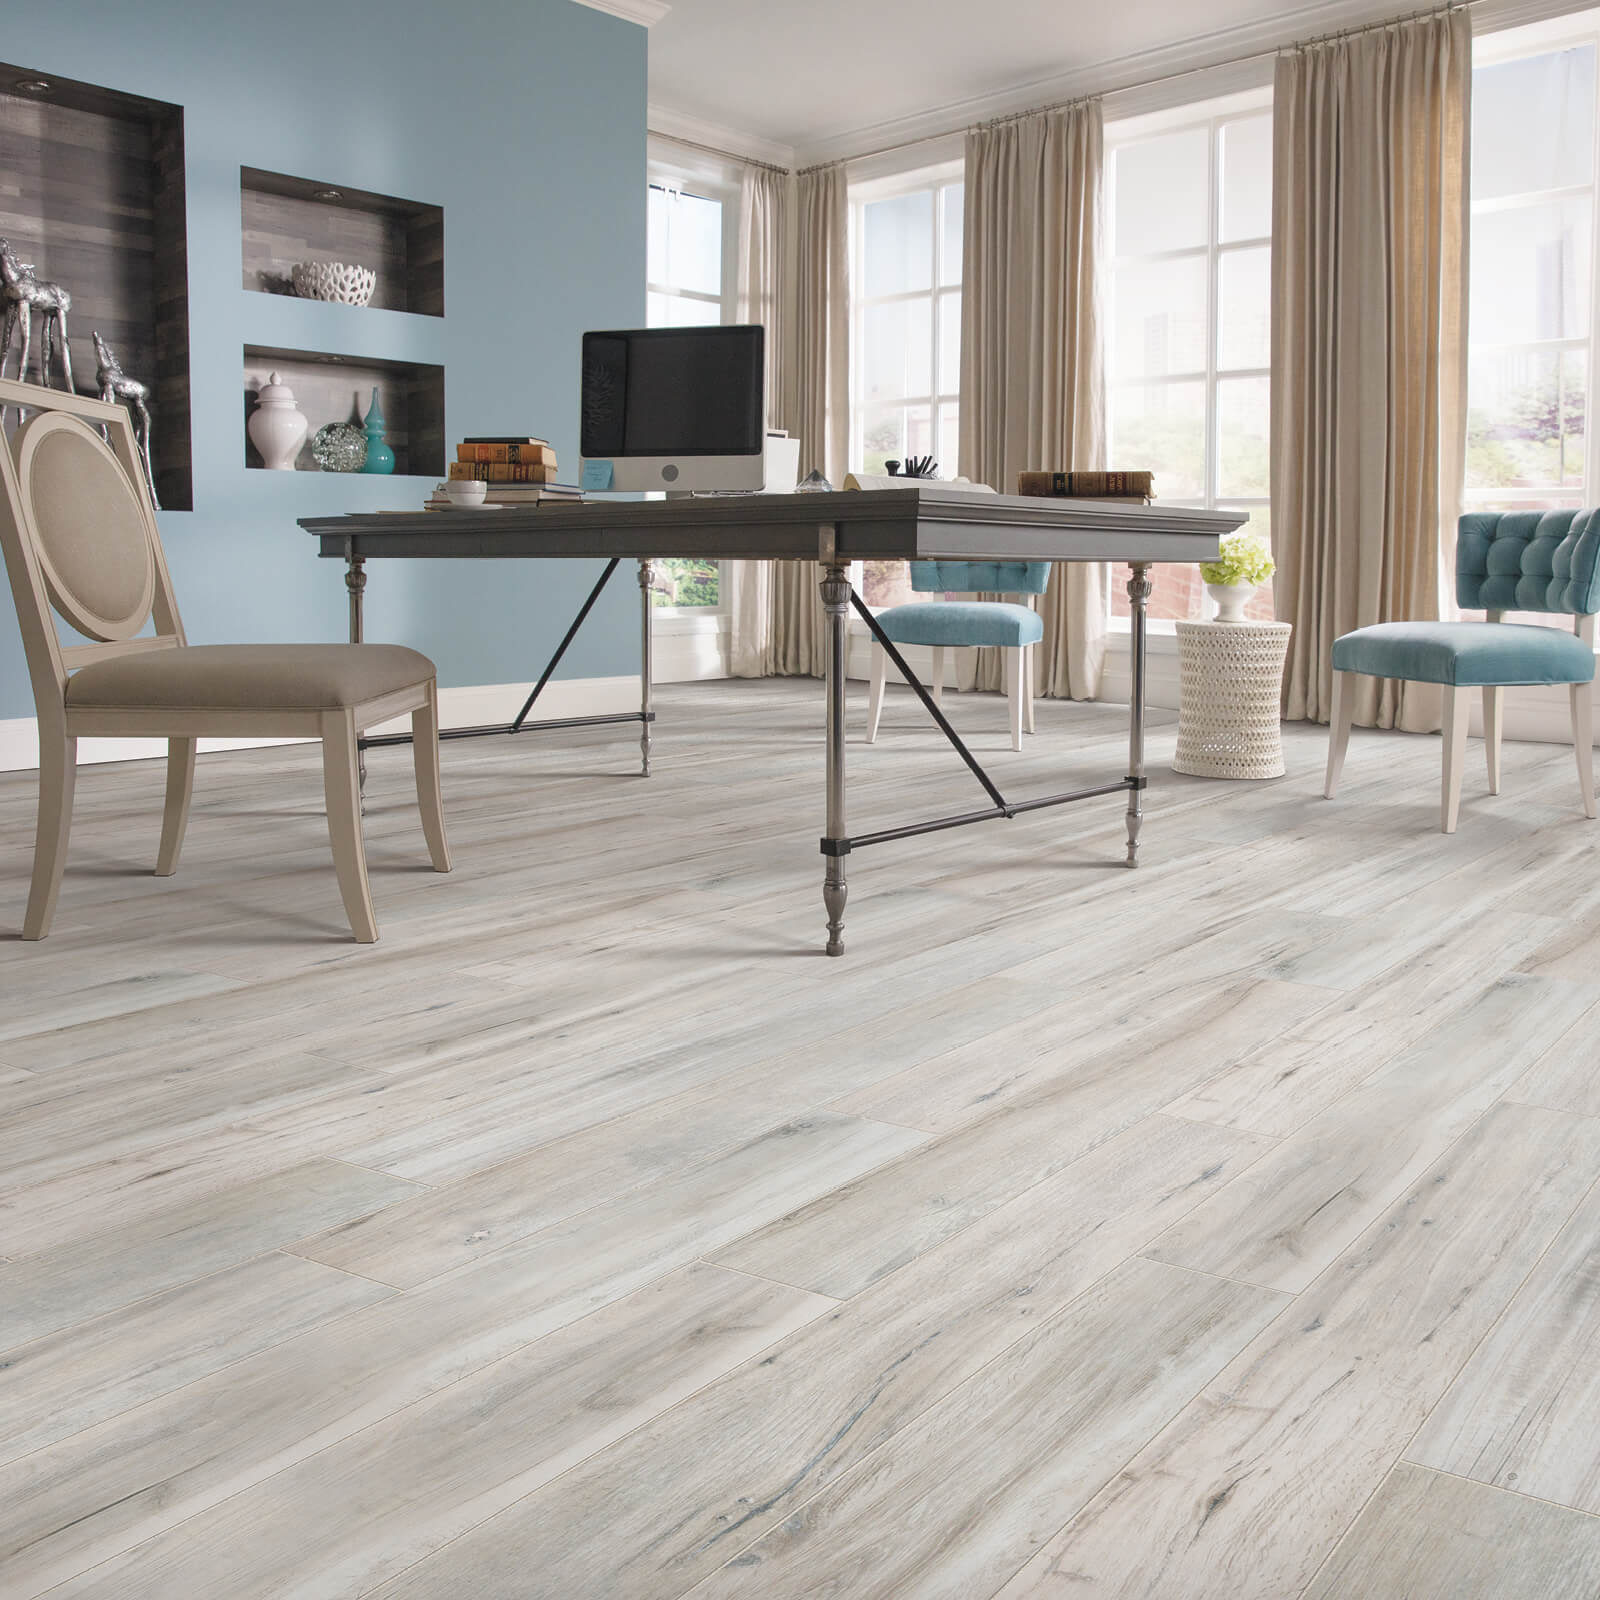 Magnolia bend chesapeake Grey Tile | Wacky's Flooring